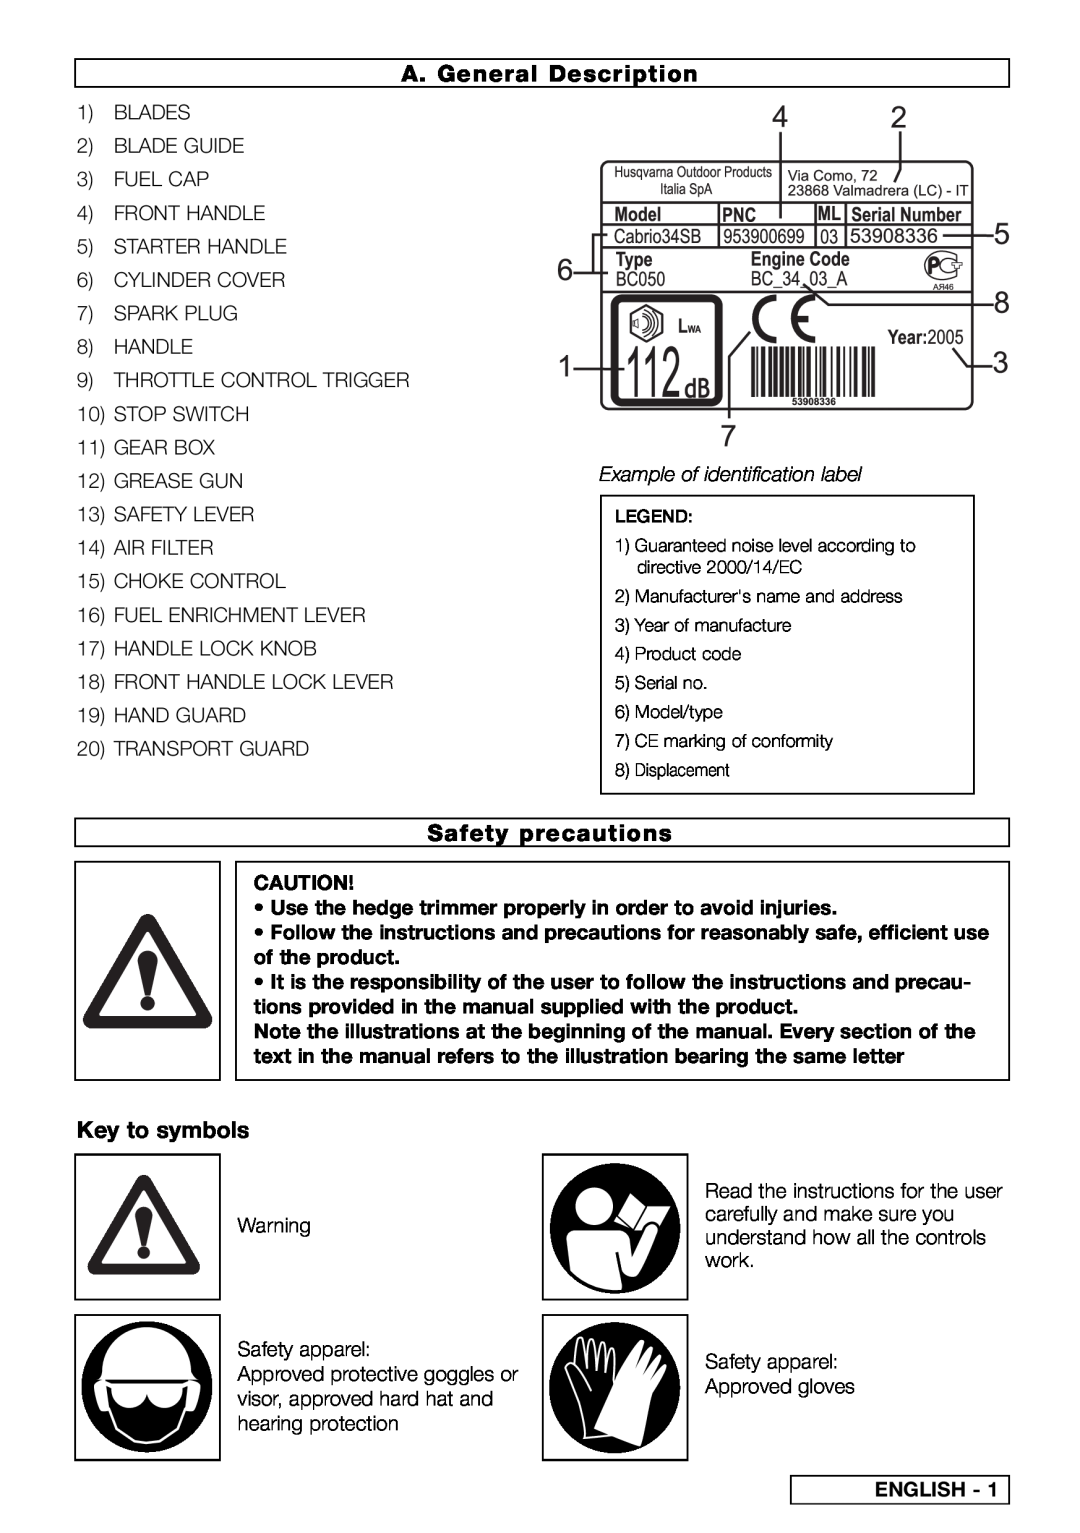 Husqvarna PN 249512 A. General Description, Safety precautions, Key to symbols, English, Example of identification label 